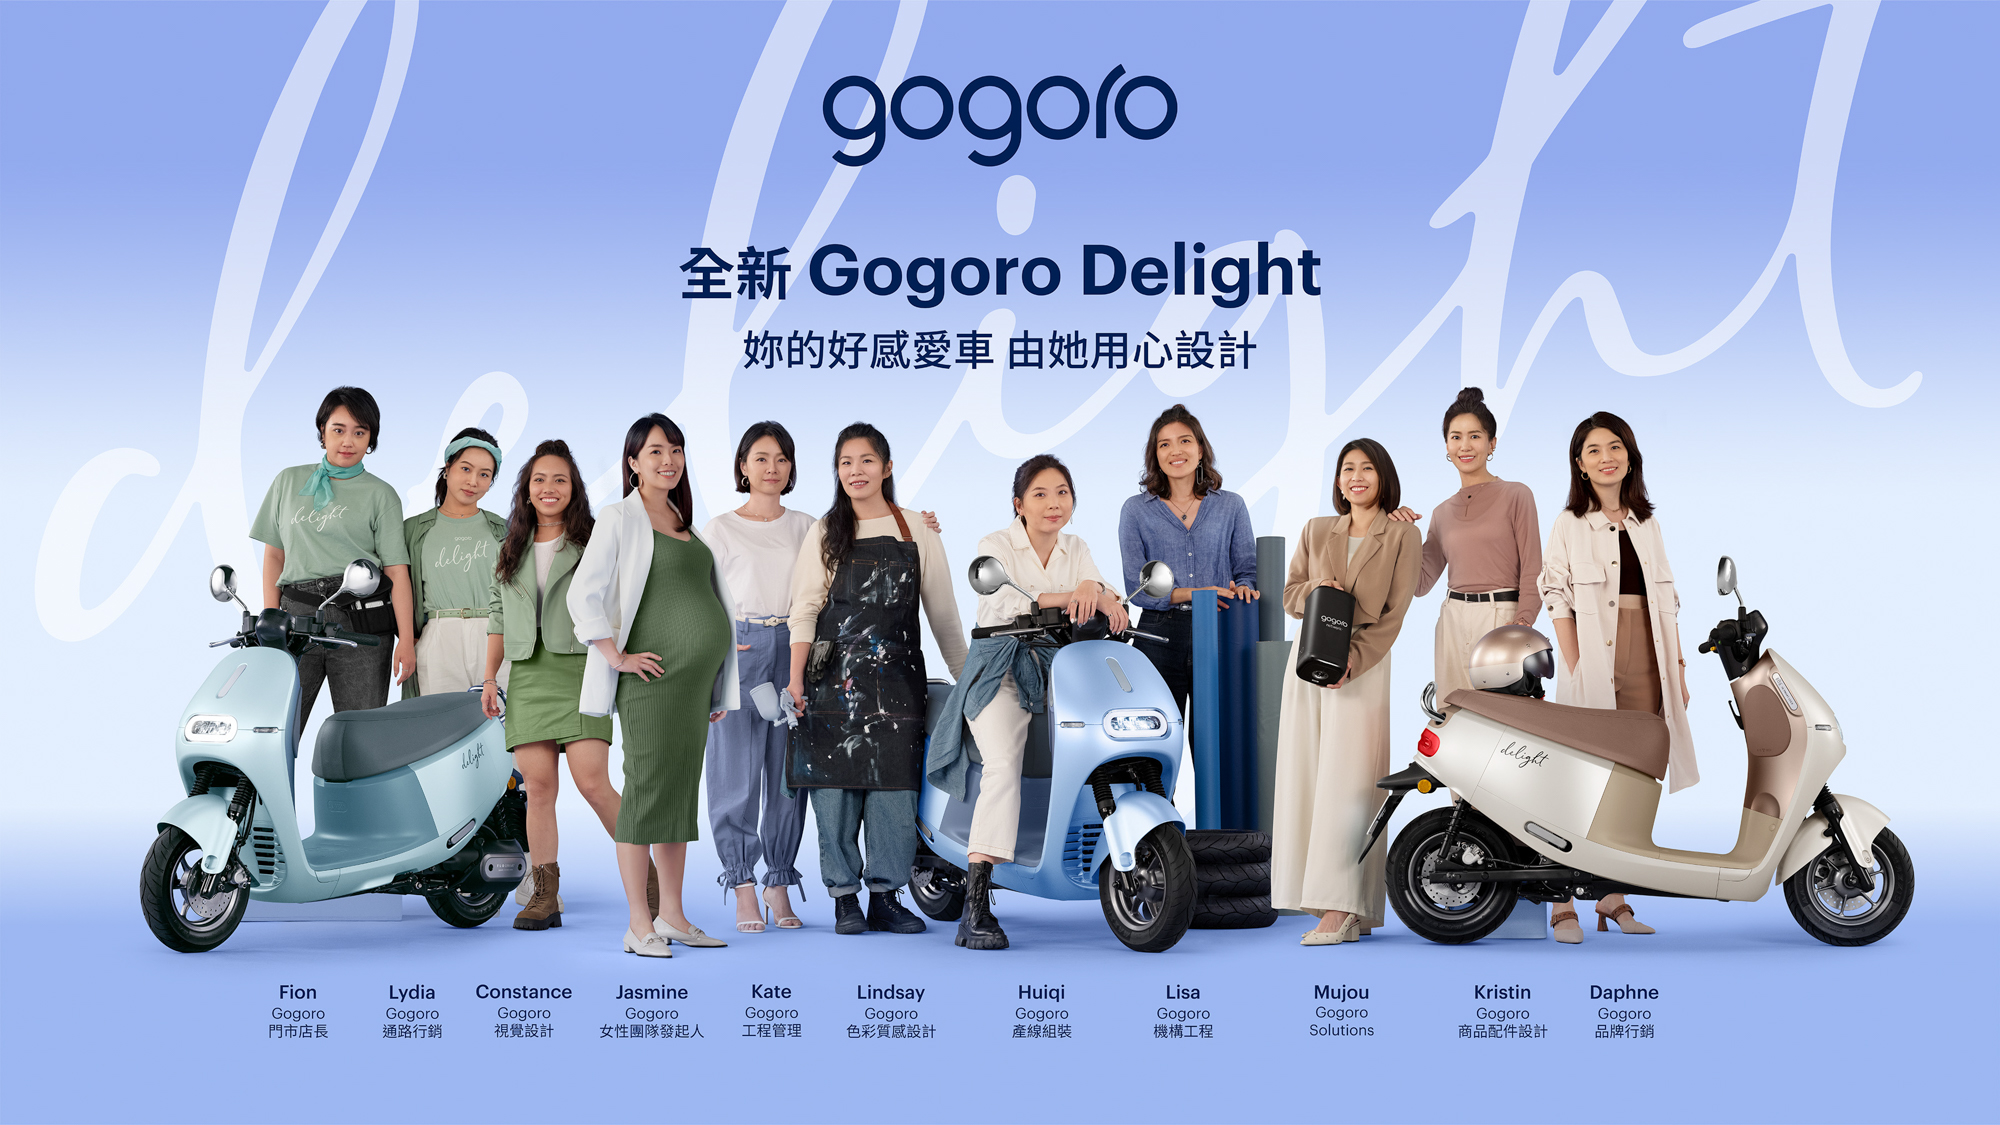 負責 Gogoro Delight 產品開發的所有女性團隊。